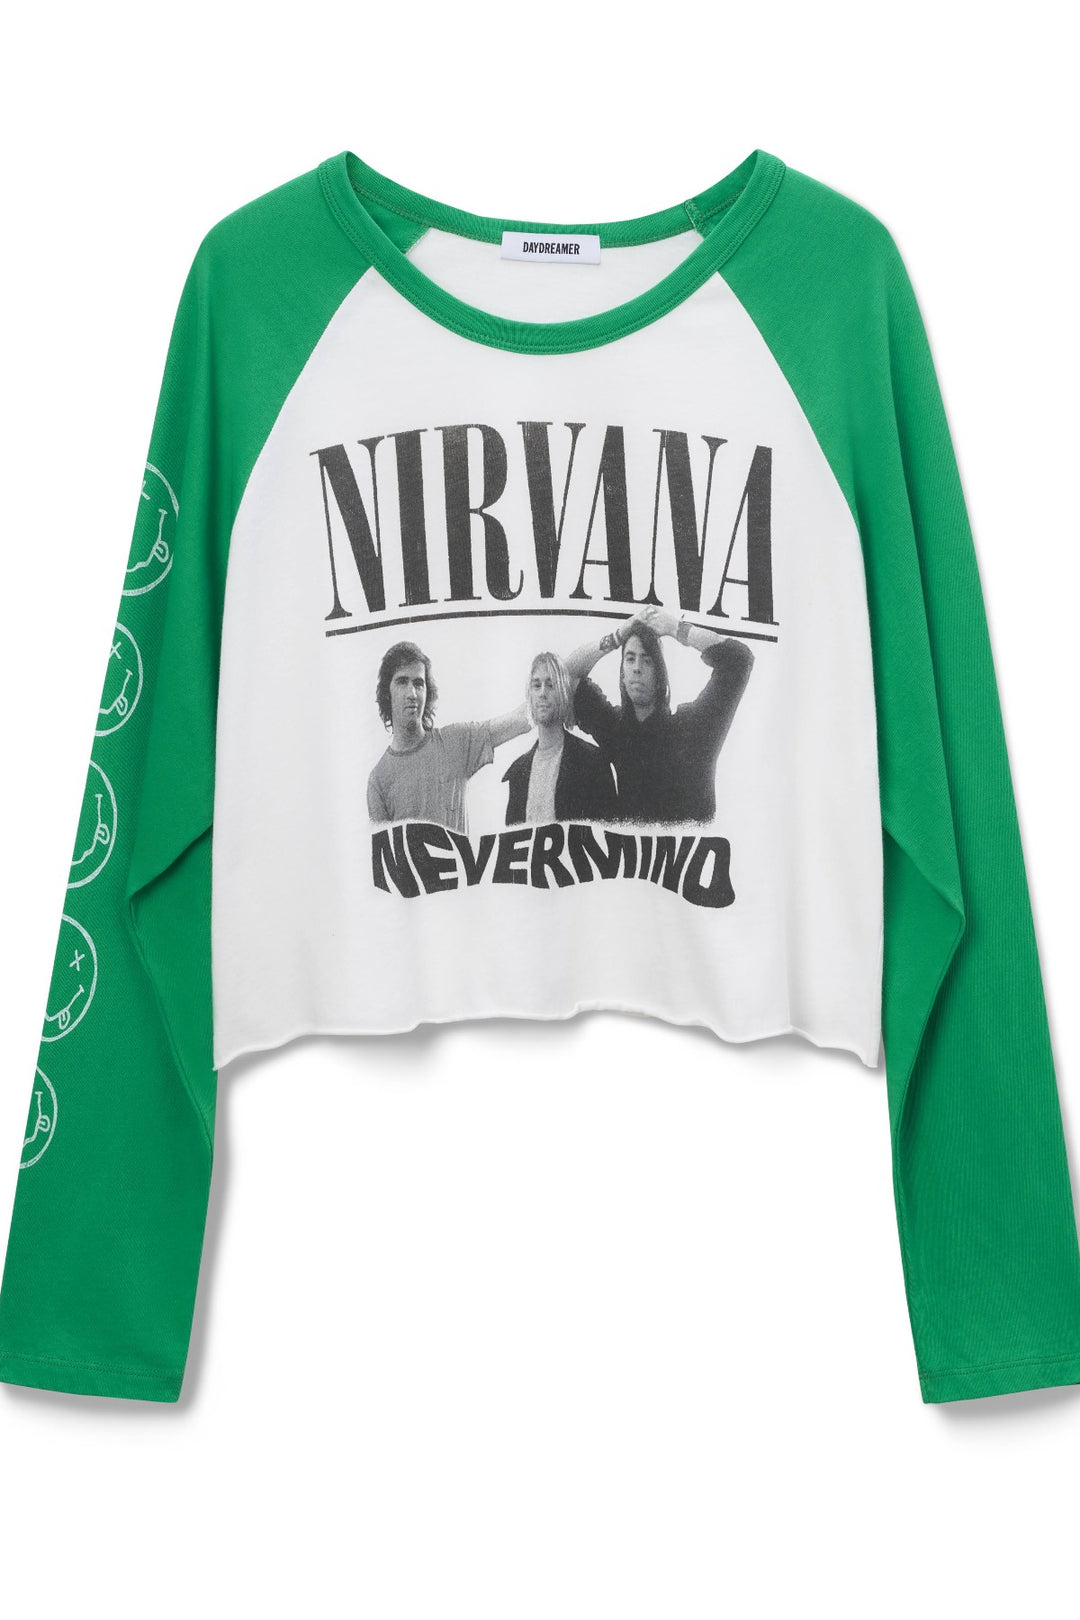 Daydreamer Nirvana Nevermind Crop Long Sleeve Raglan